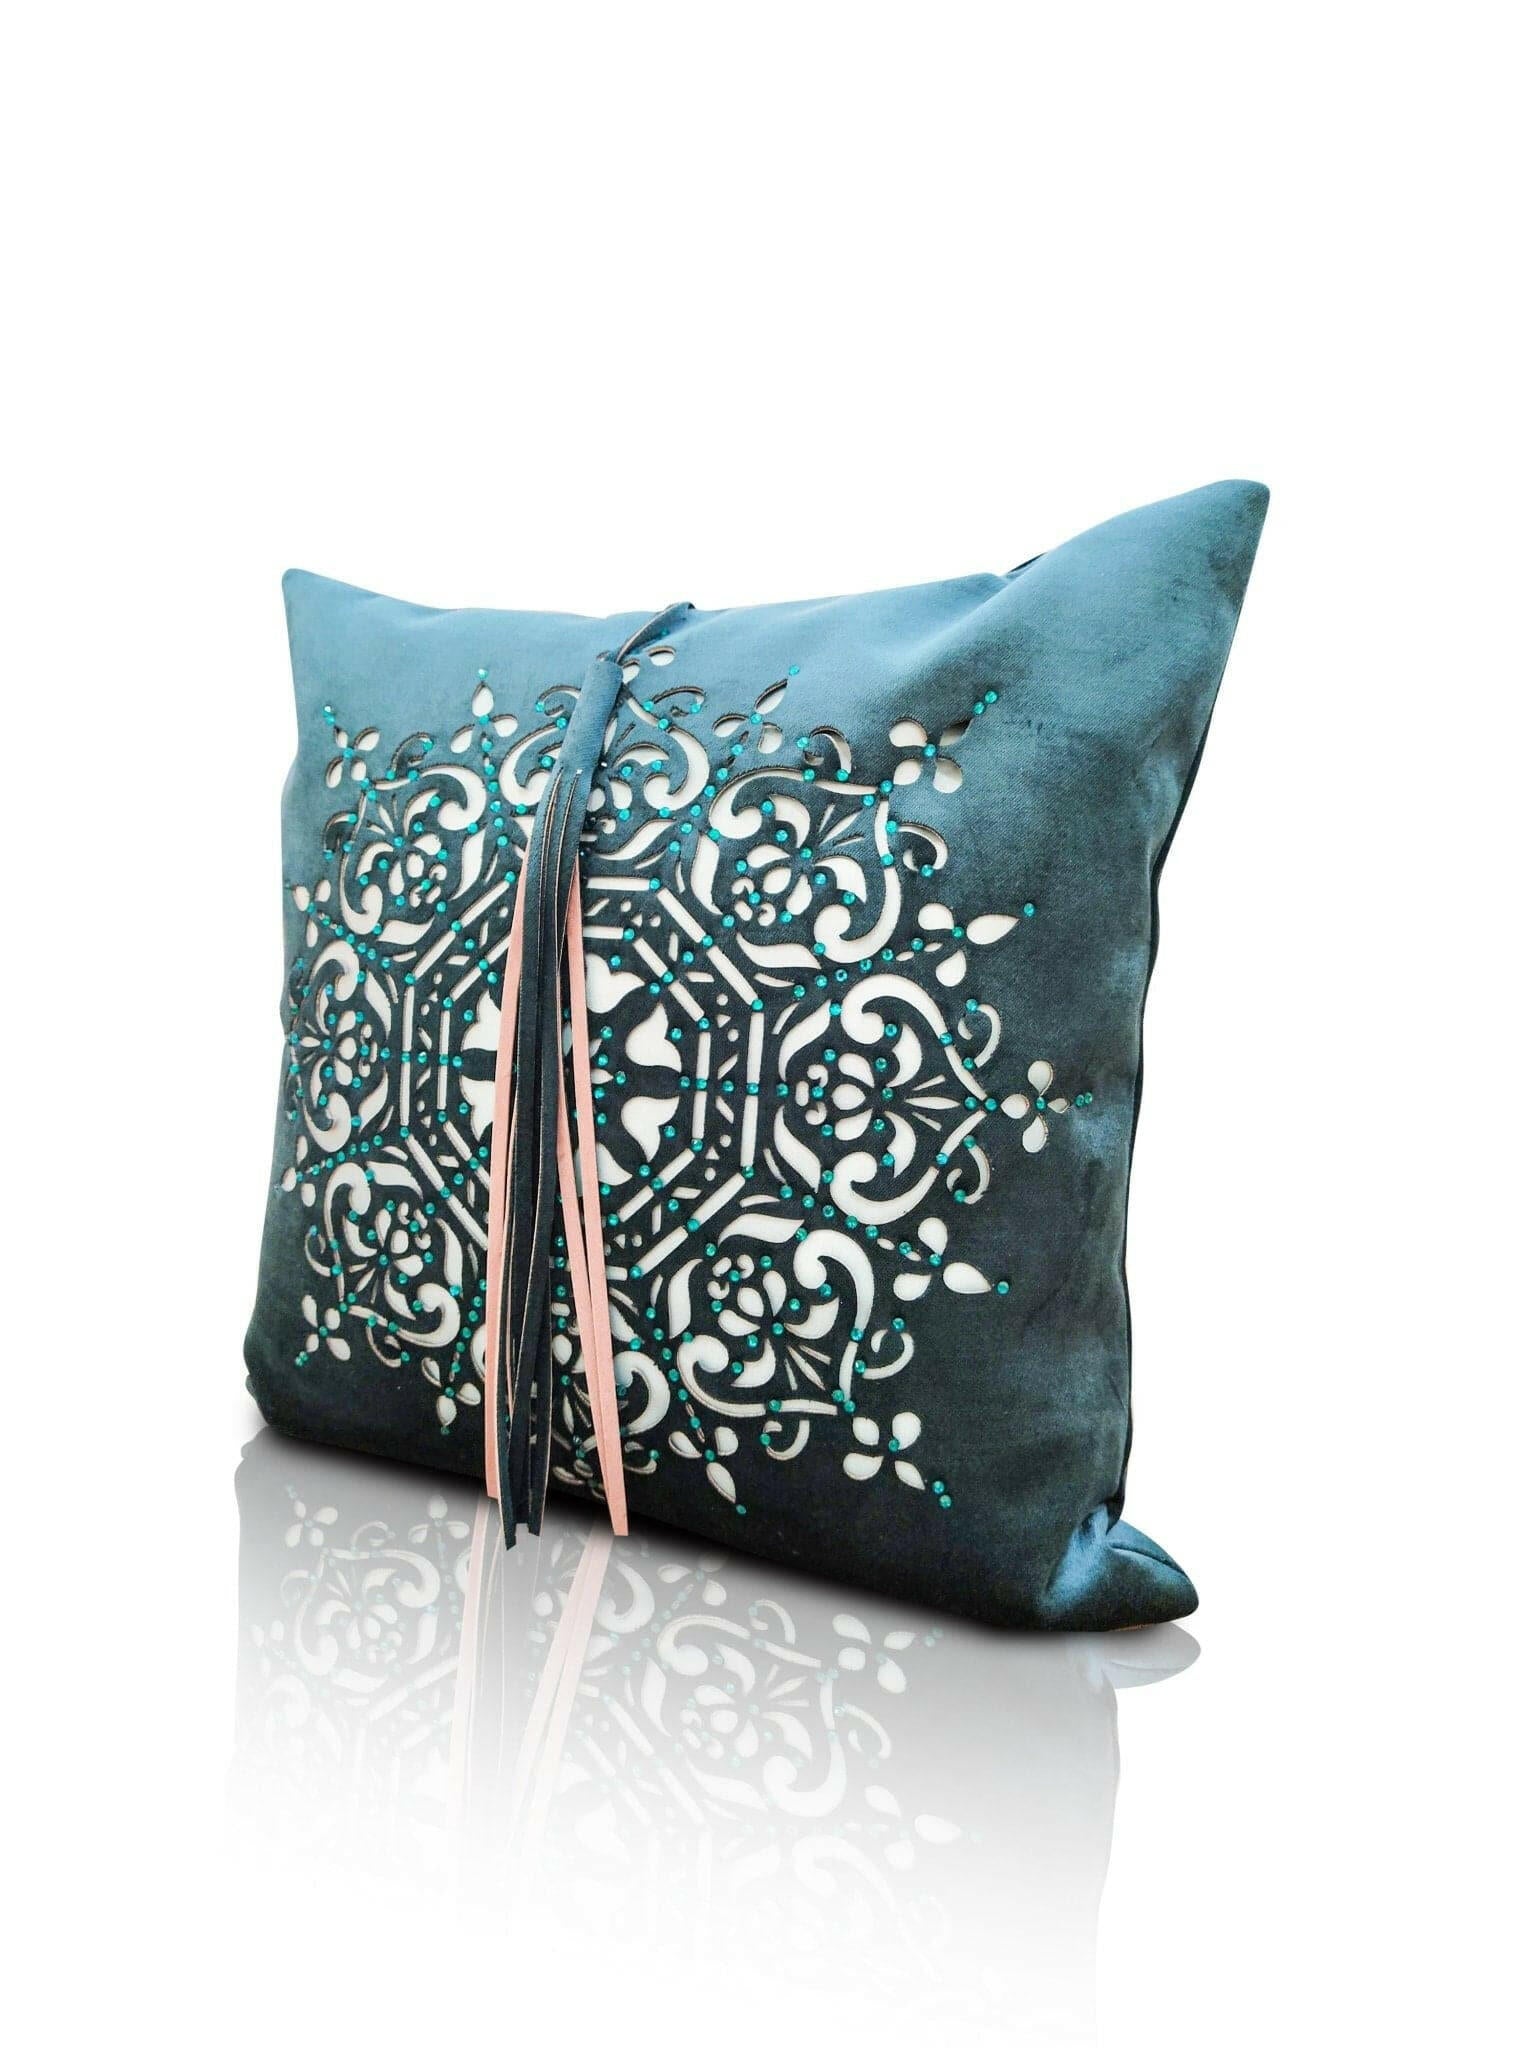 Damask Cushion Cover - Creative Home Designs Pillowcases, Turkish Throw Pillows & Shams, Petrol Blue Color Cut Out Sham With Diamonds,CC-CH-DMSK-P-1S1R,CC-CH-DMSK-P-2S,CC-CH-DMSK-P-2R,CC-CH-DMSK-P-2S1R